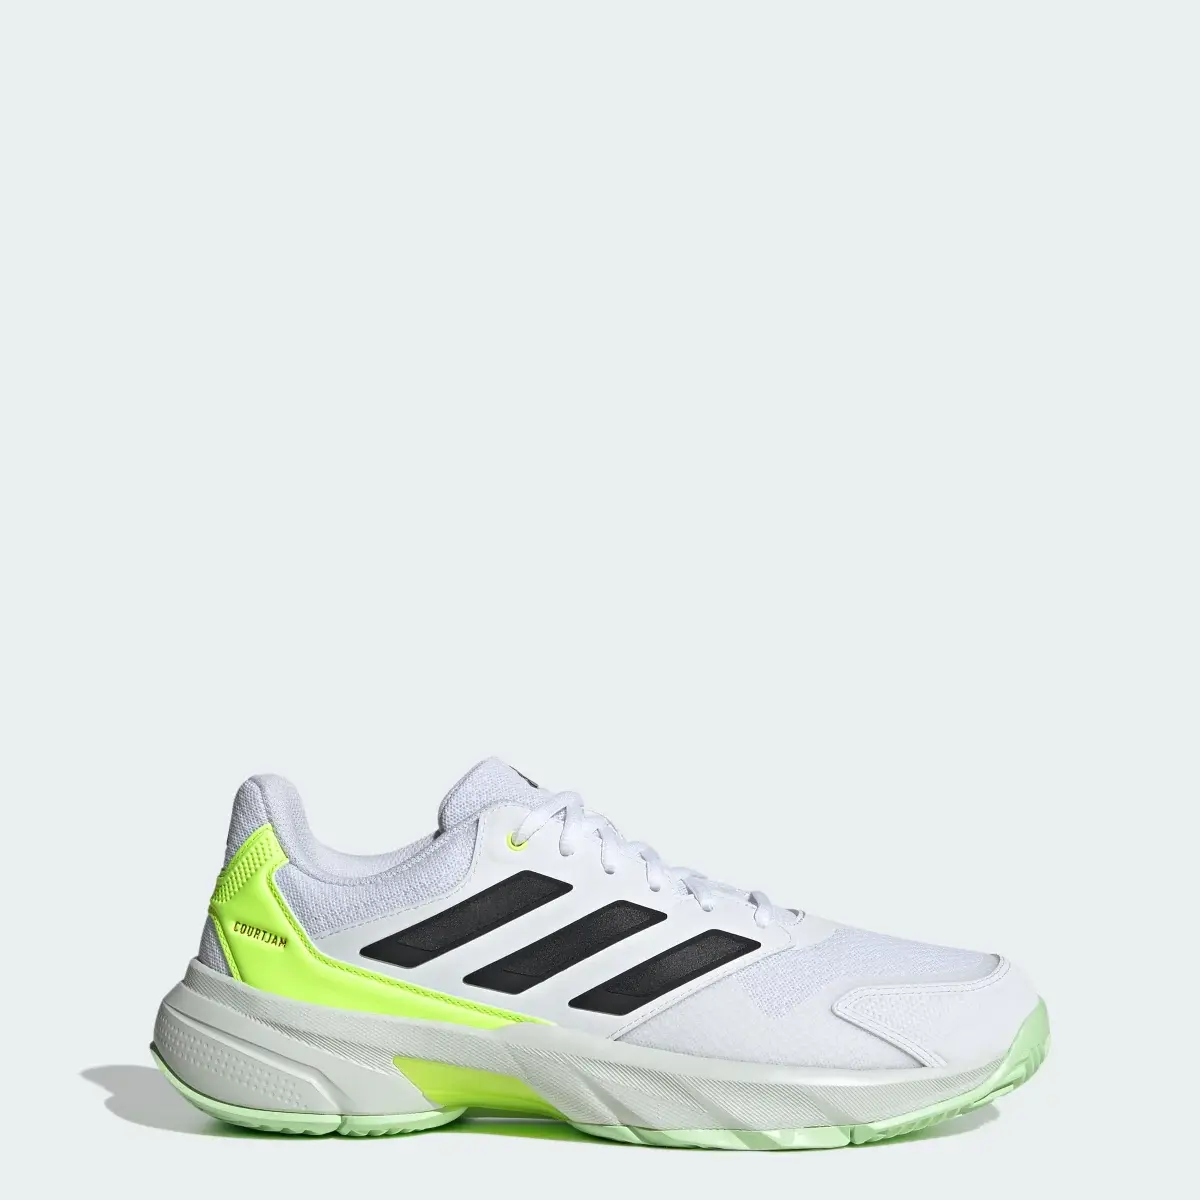 Adidas CourtJam Control 3 Tennis Shoes. 1